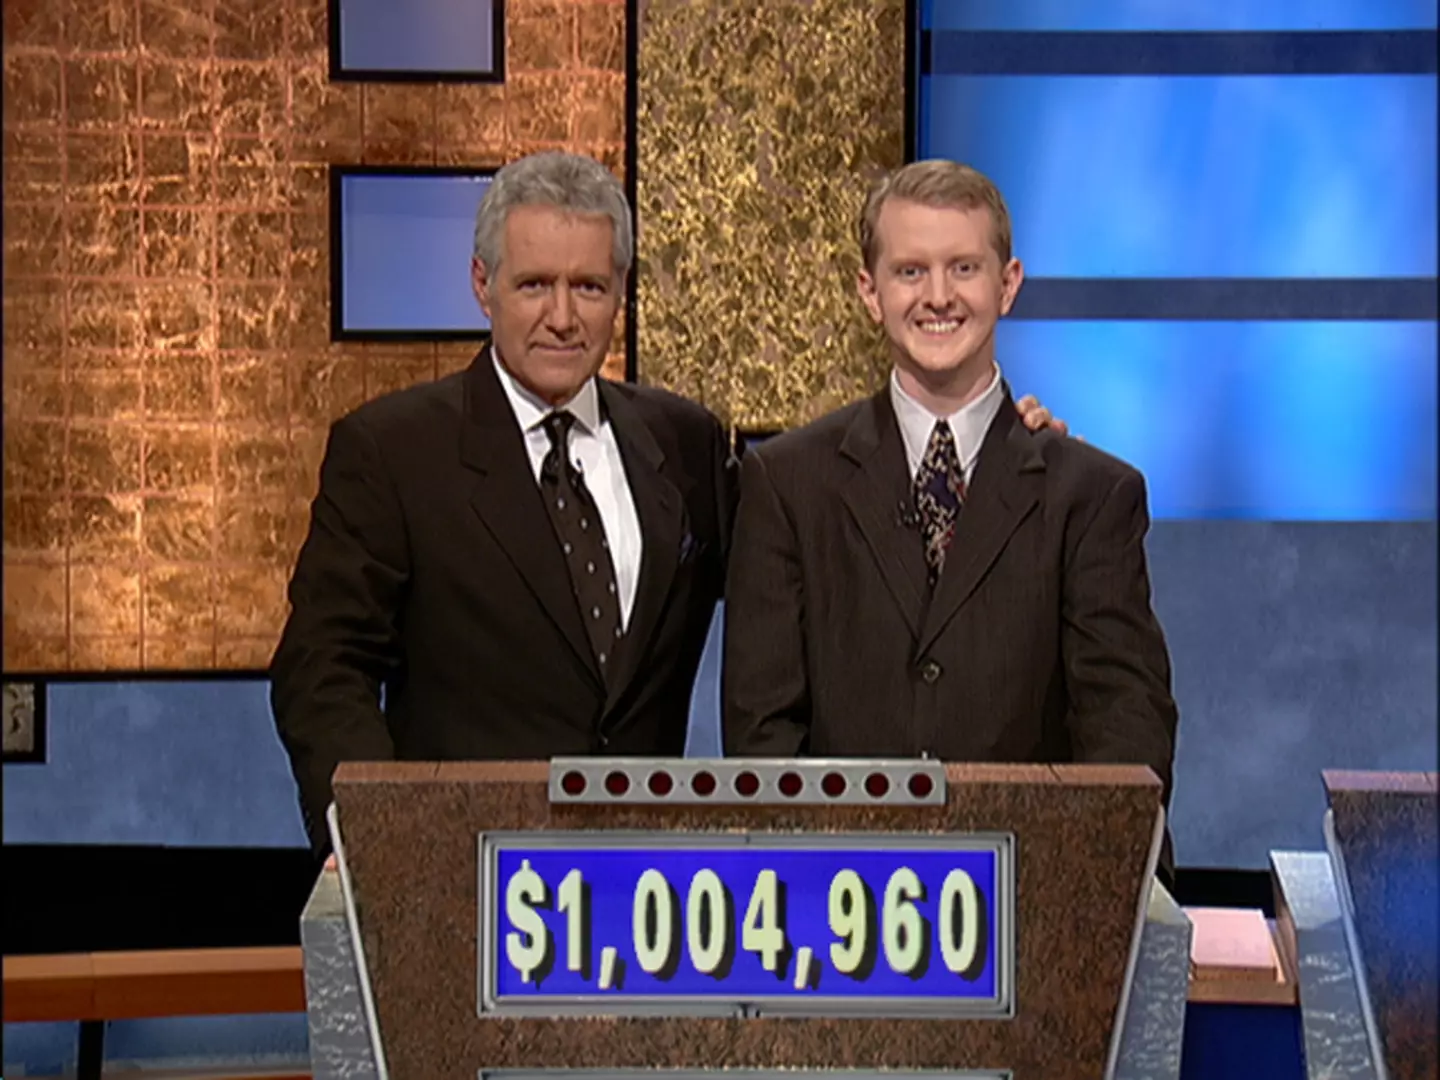 Ken Jennings was the greatest Jeopardy! contestant before succeeding Alex Trebek as host.